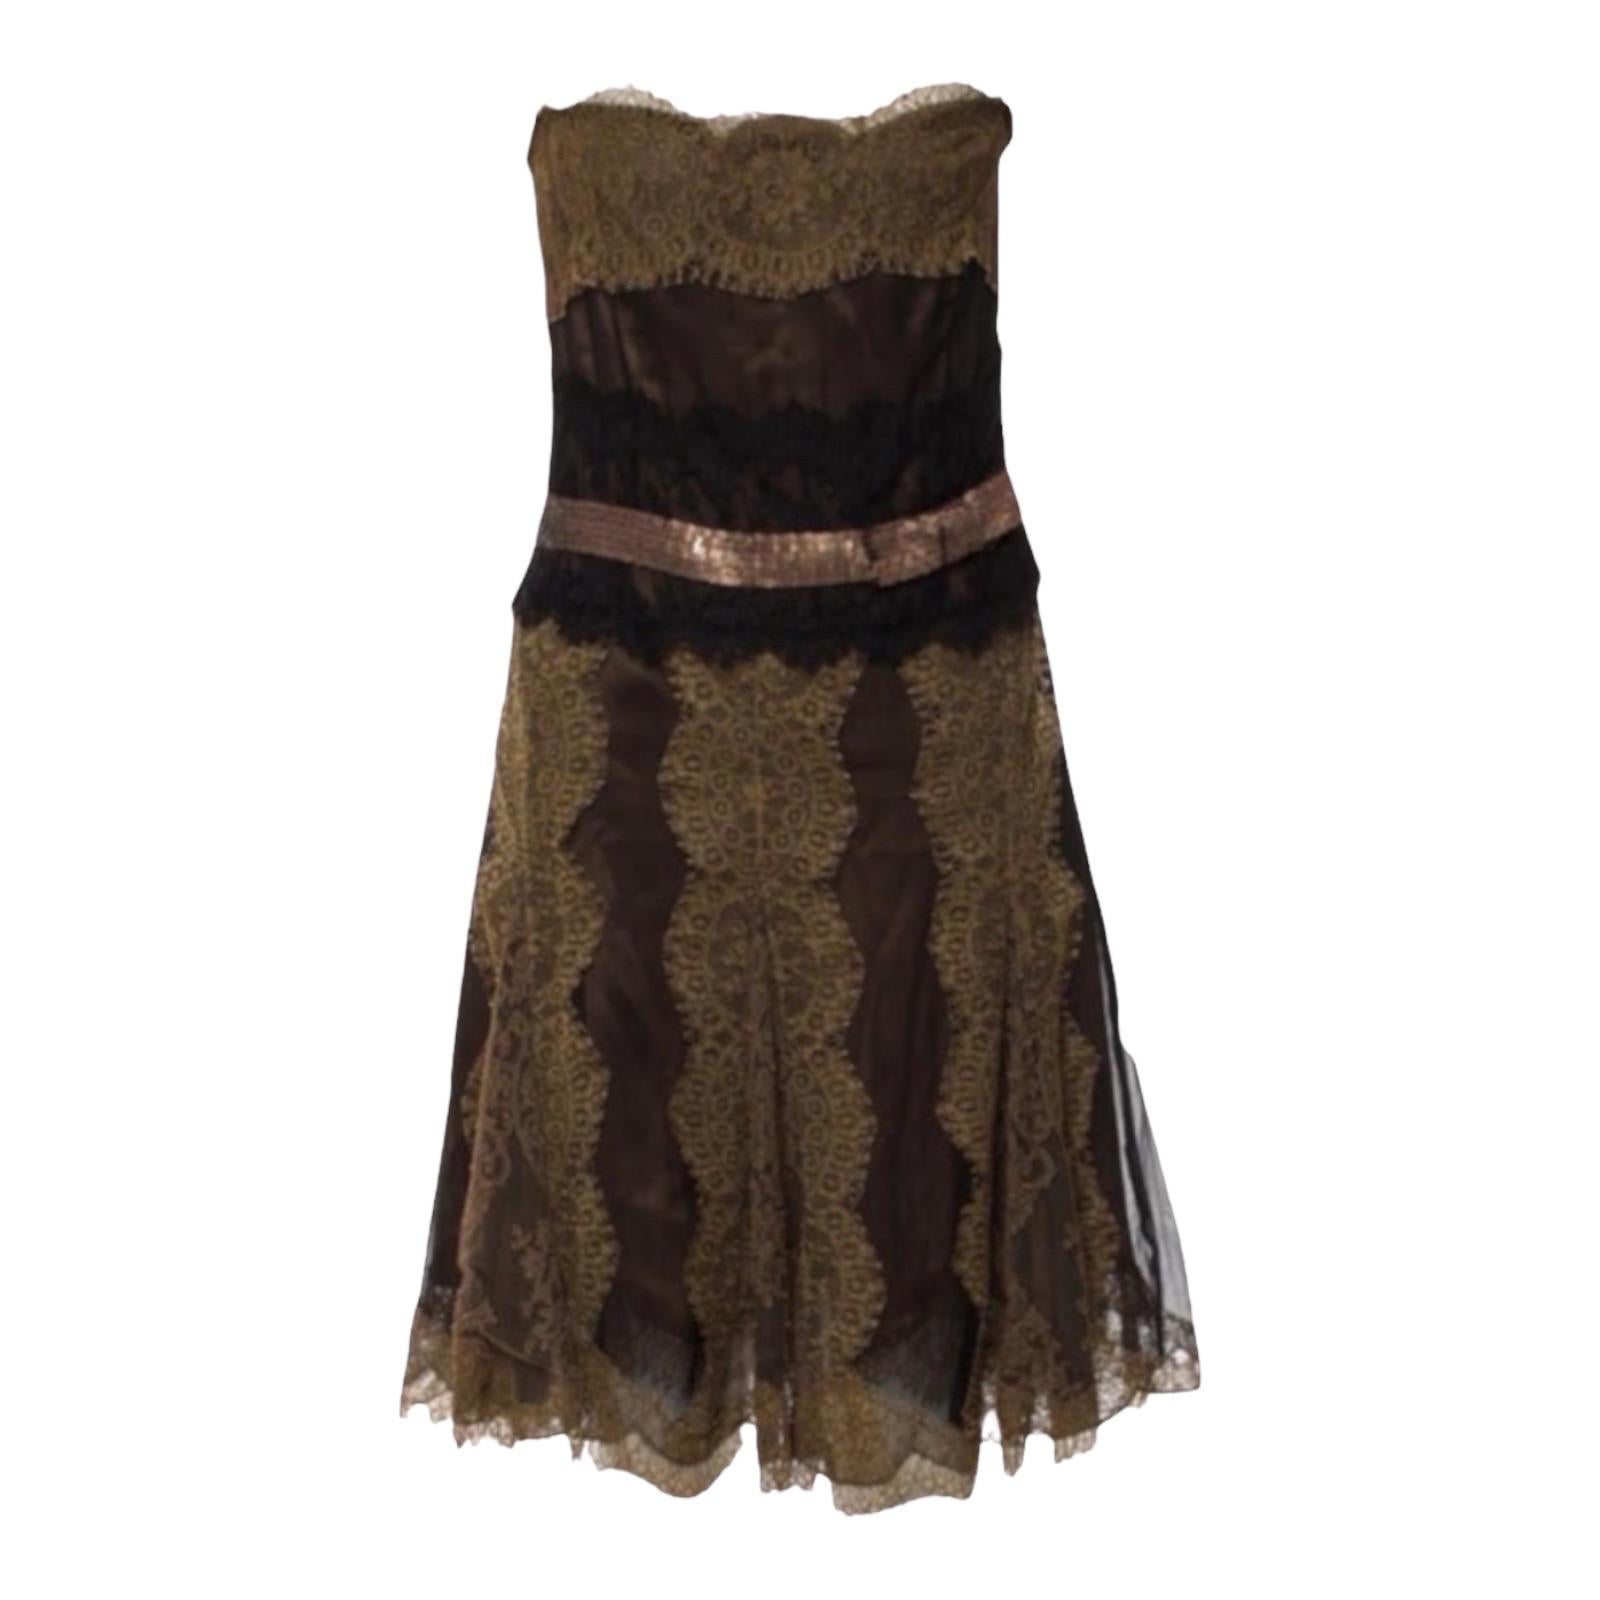 Stunning Dolce & Gabbana Lace & Silk Evening Dress Sequin Bowtie Detail 42 For Sale